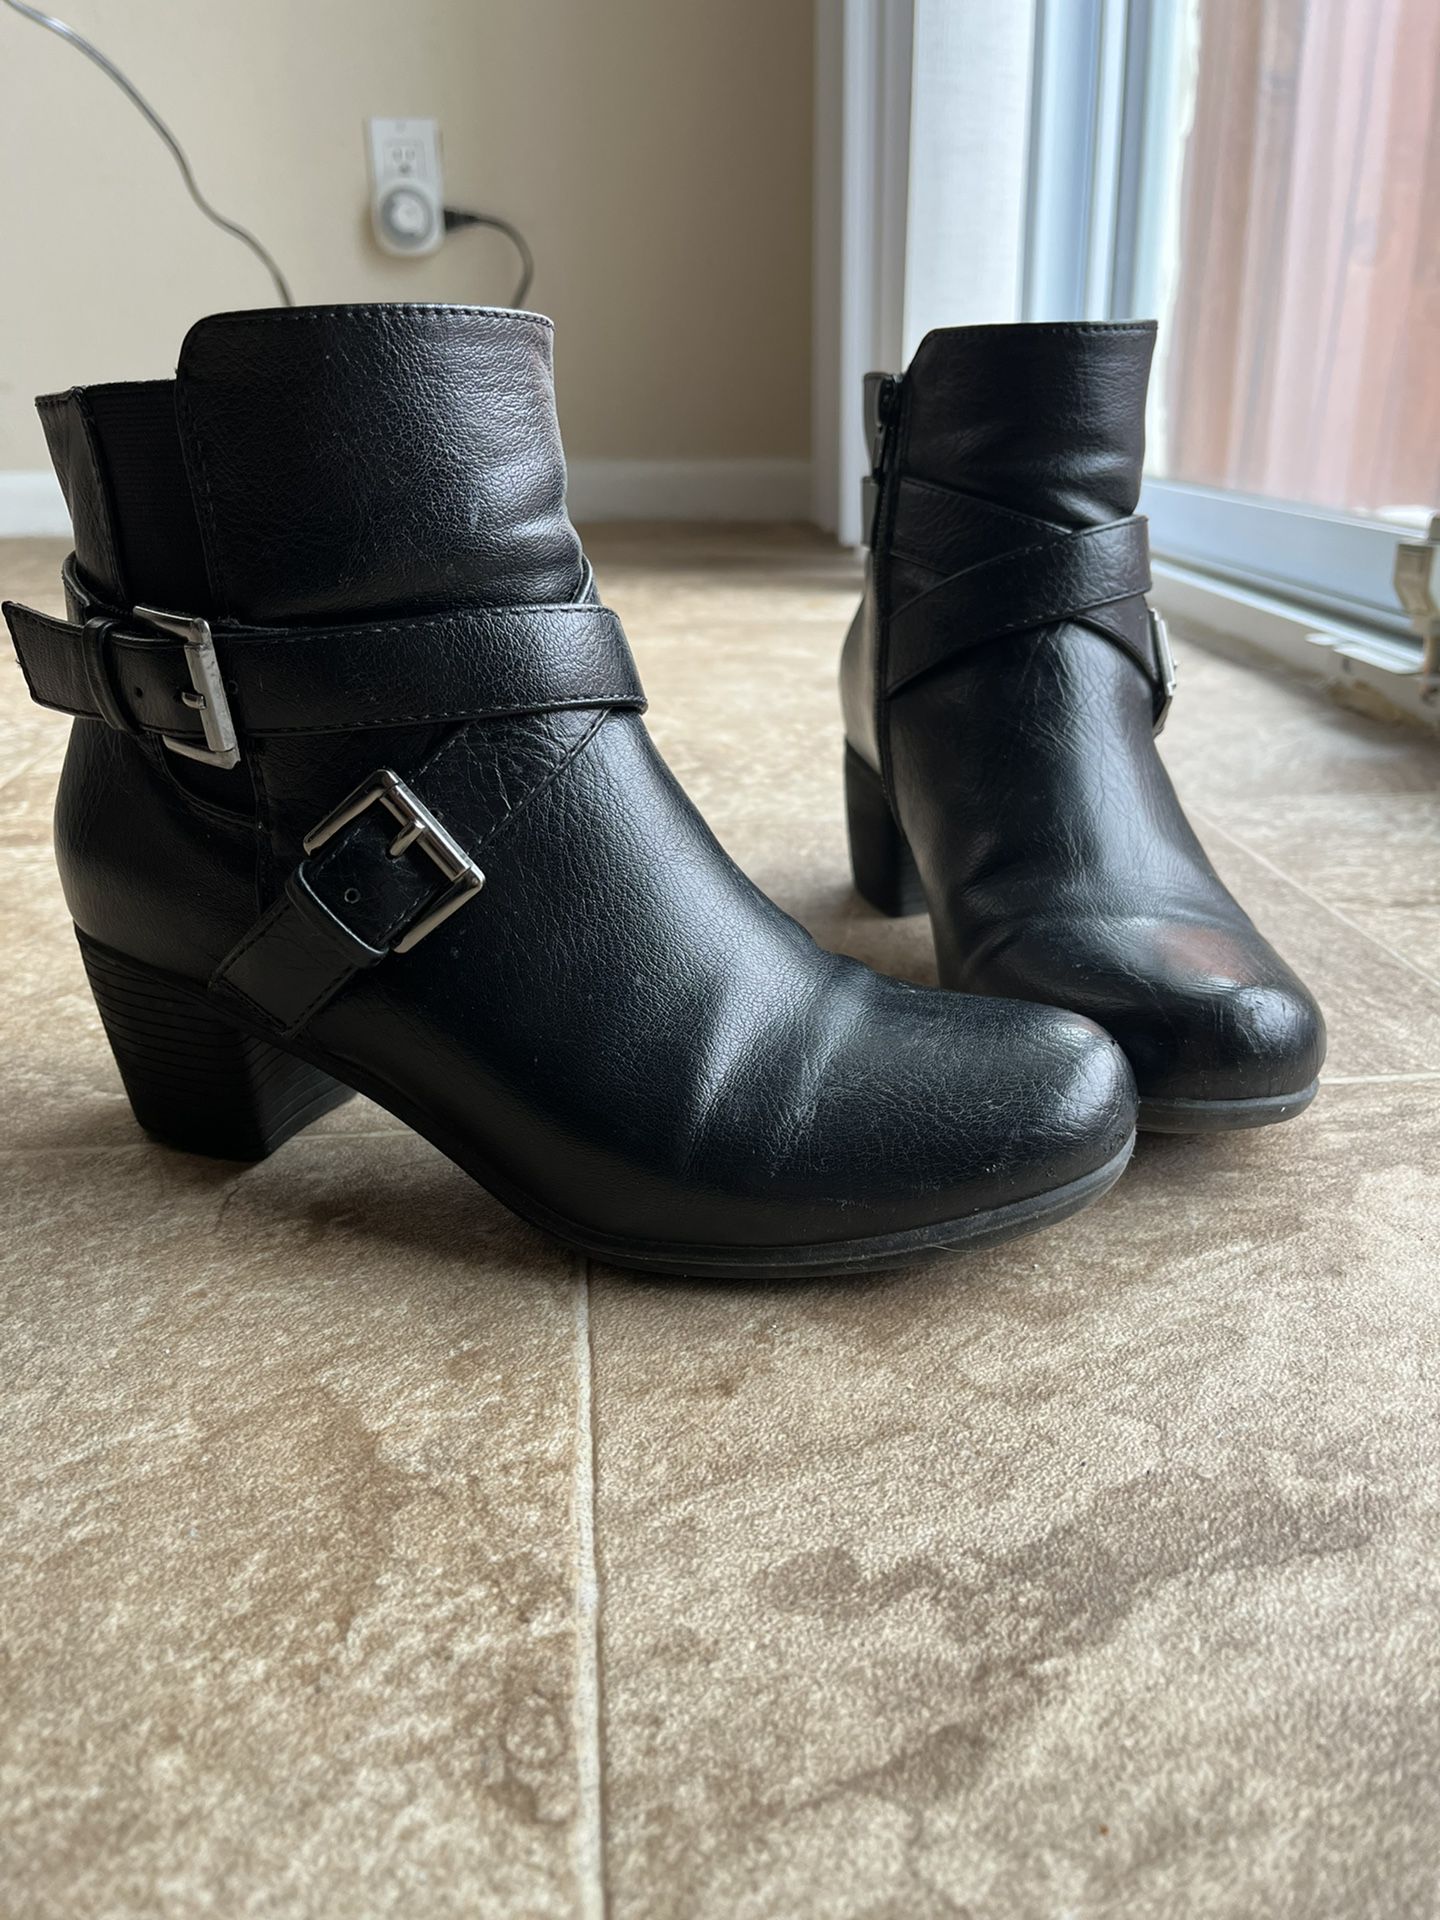 Woman’s Size 7 Black Boots